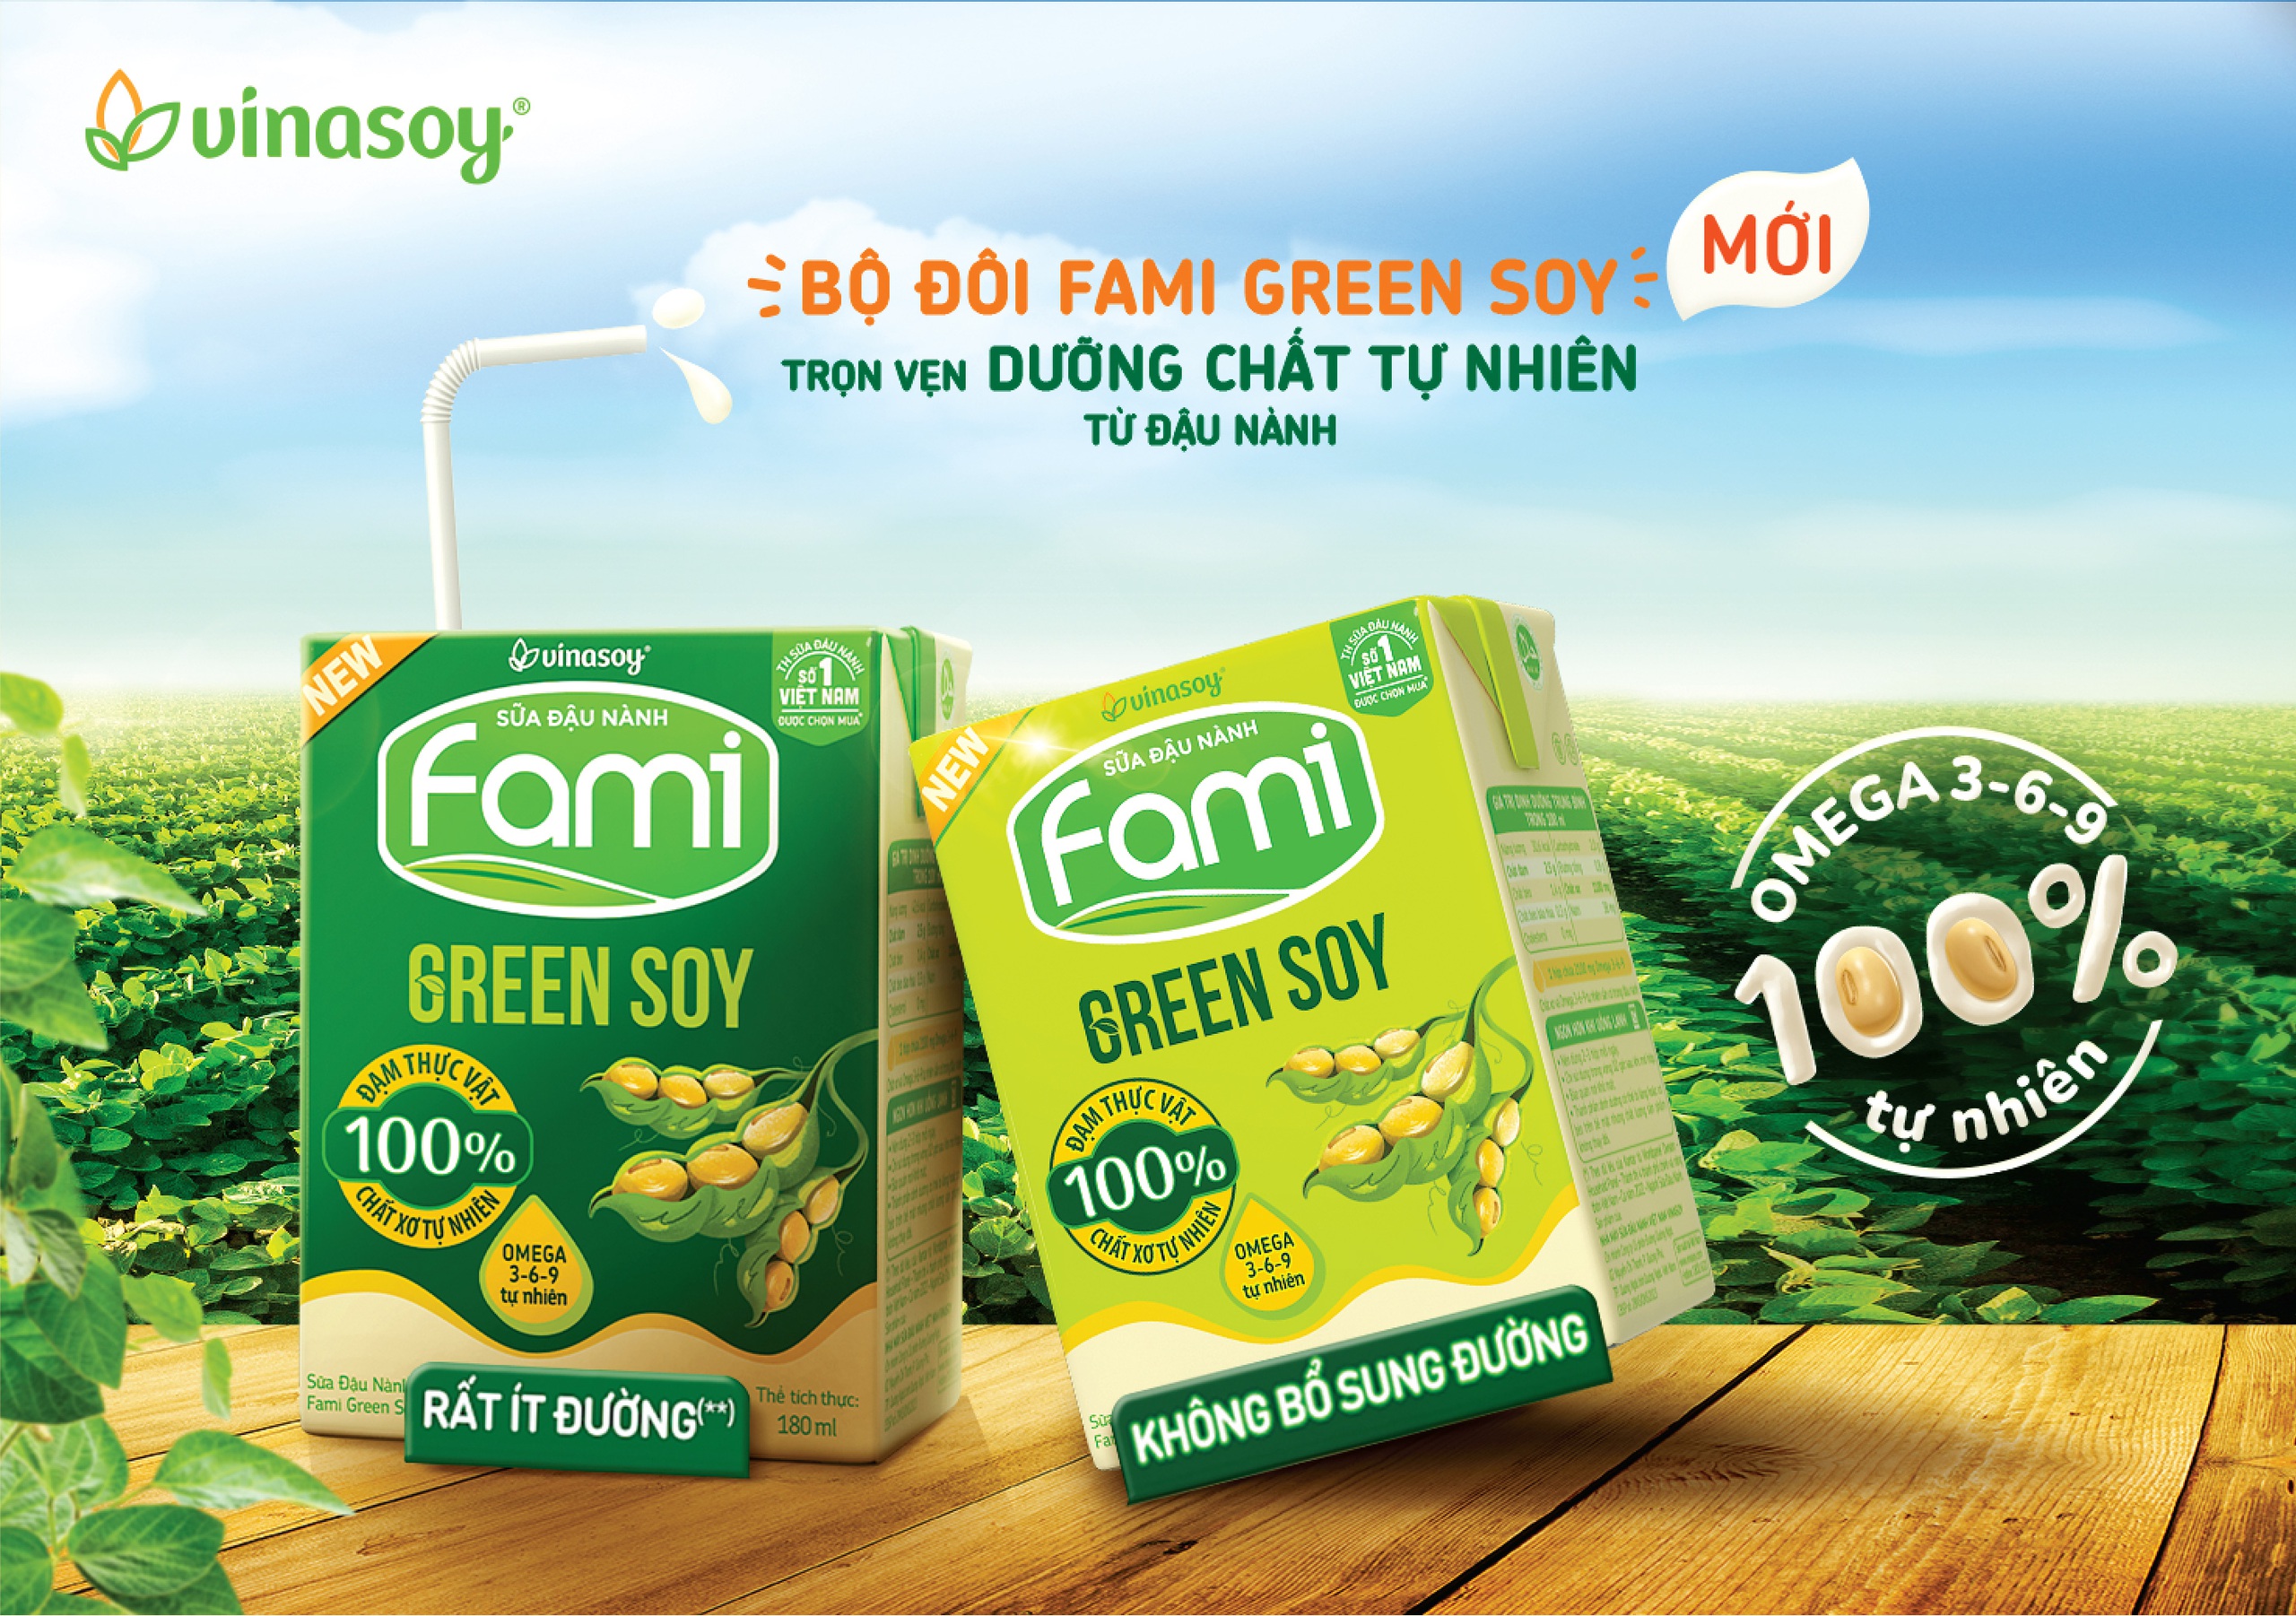 Fami Green Soy – Vinasoy giúp 